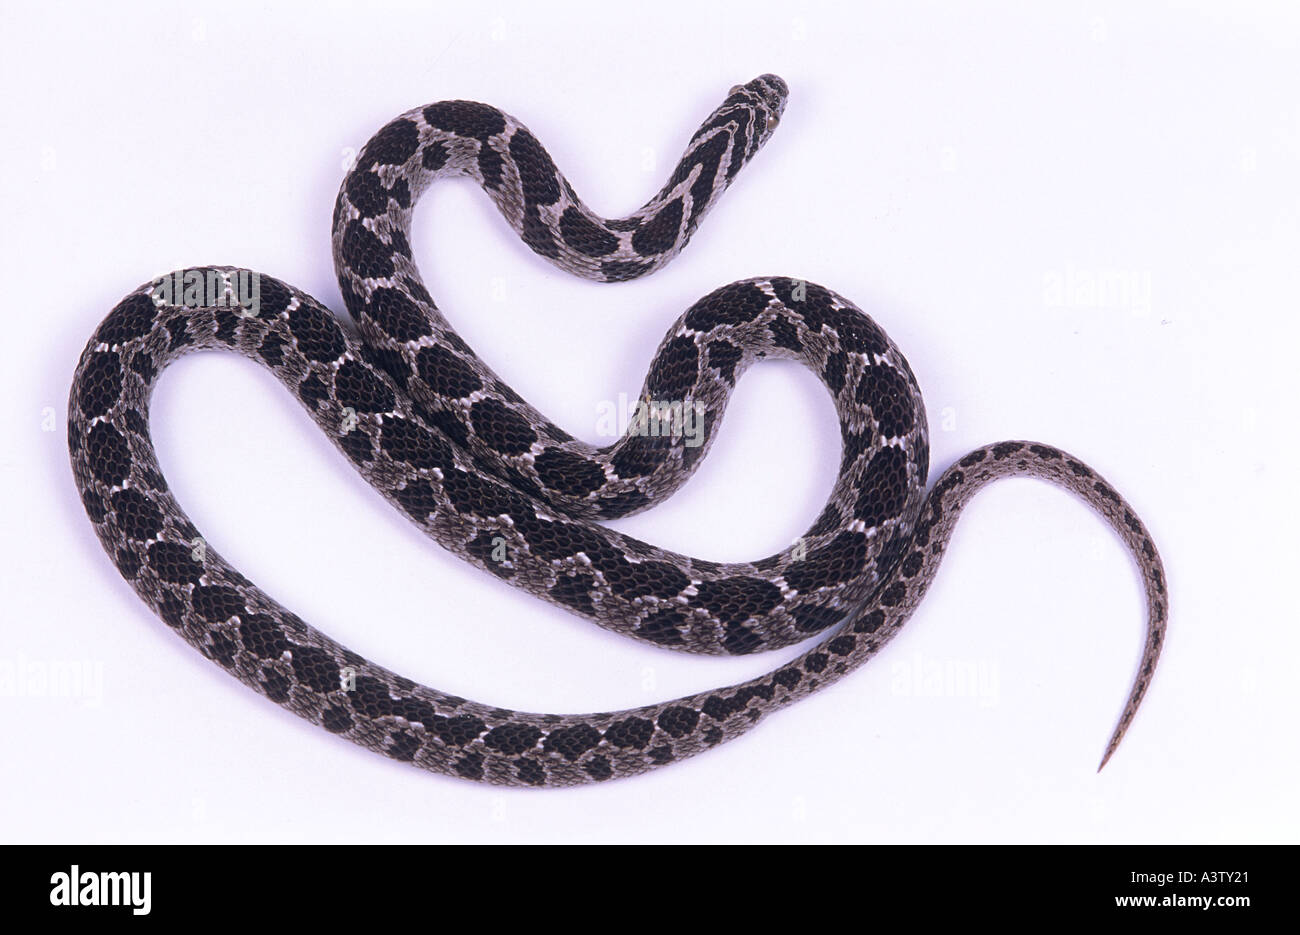 North American Rat snake or corn snake, elaphe bairdi Stock Photo